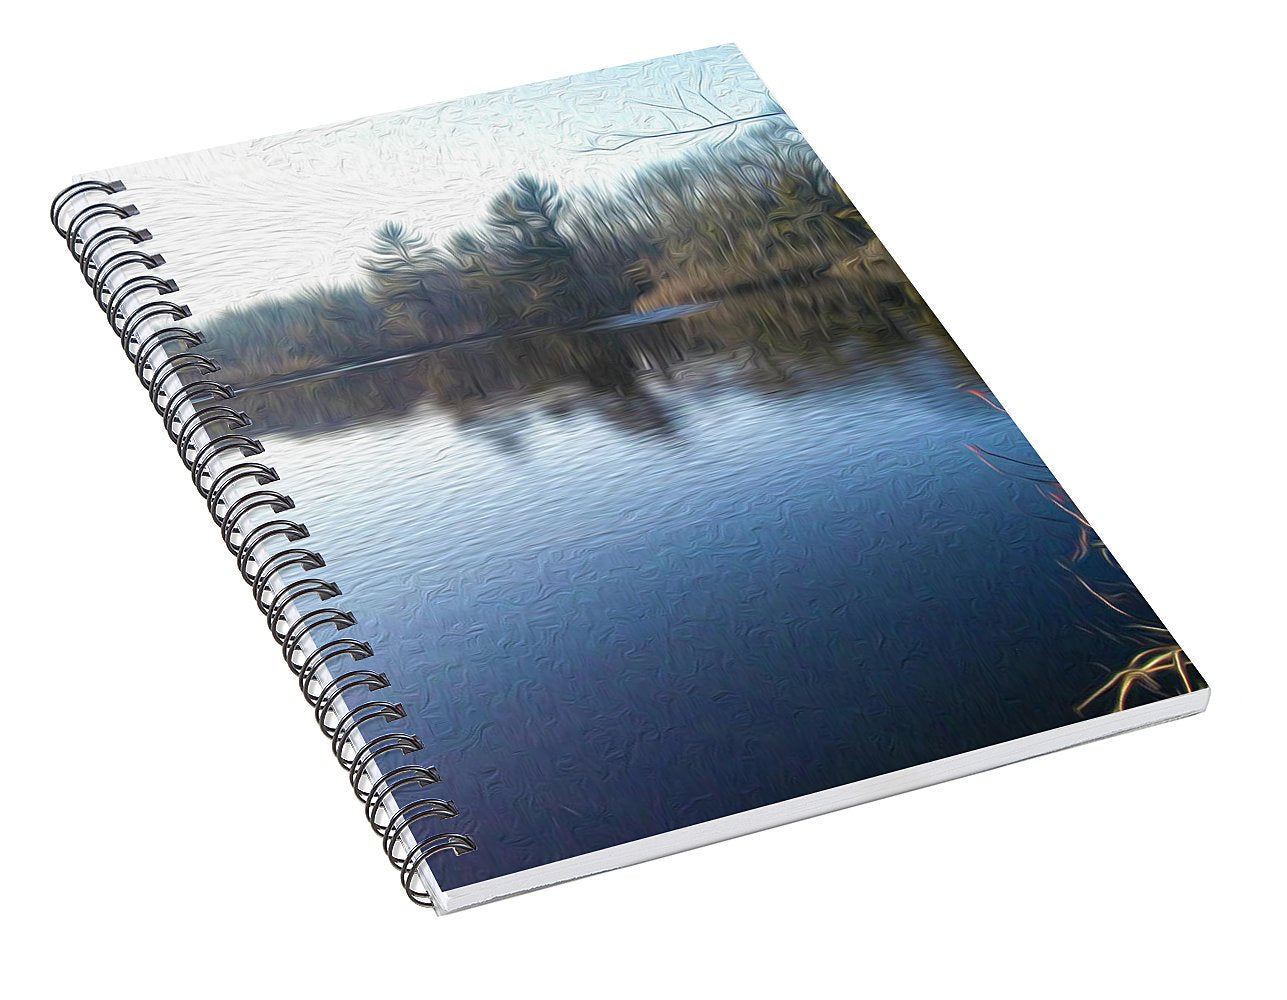 Chartley Brook Pond, Attleboro, MA - Spiral Notebook